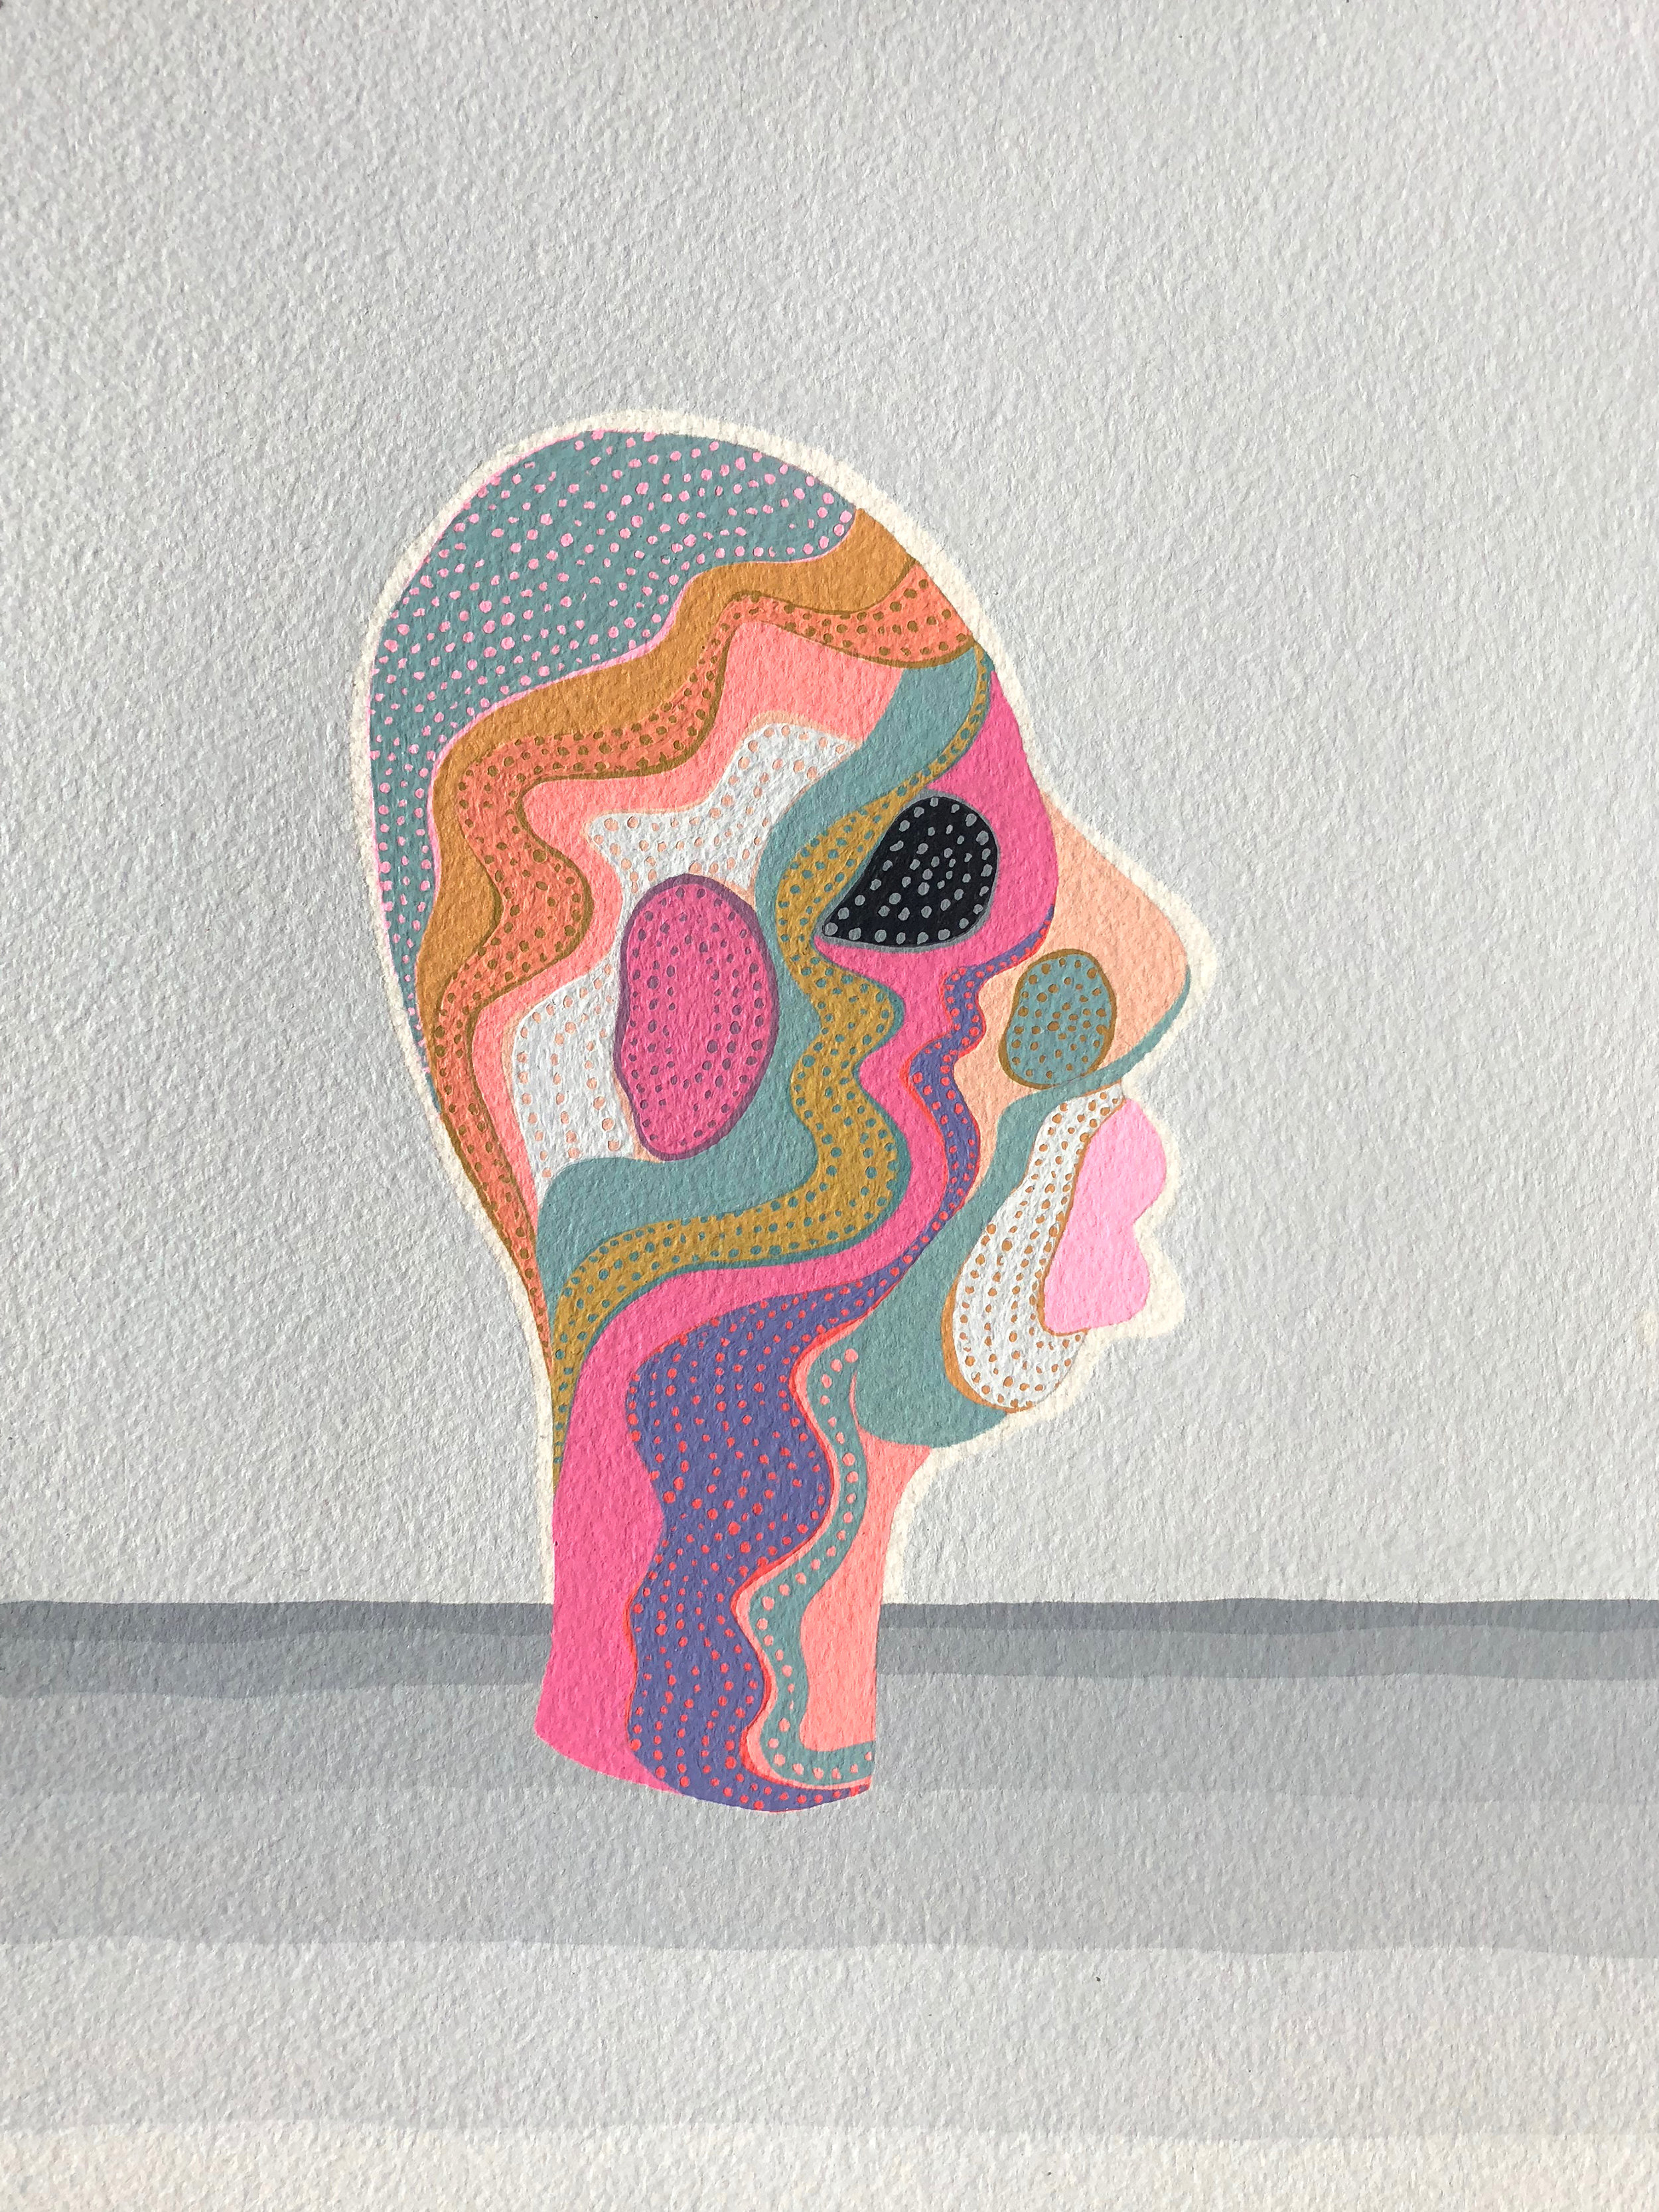 hypercolour head III